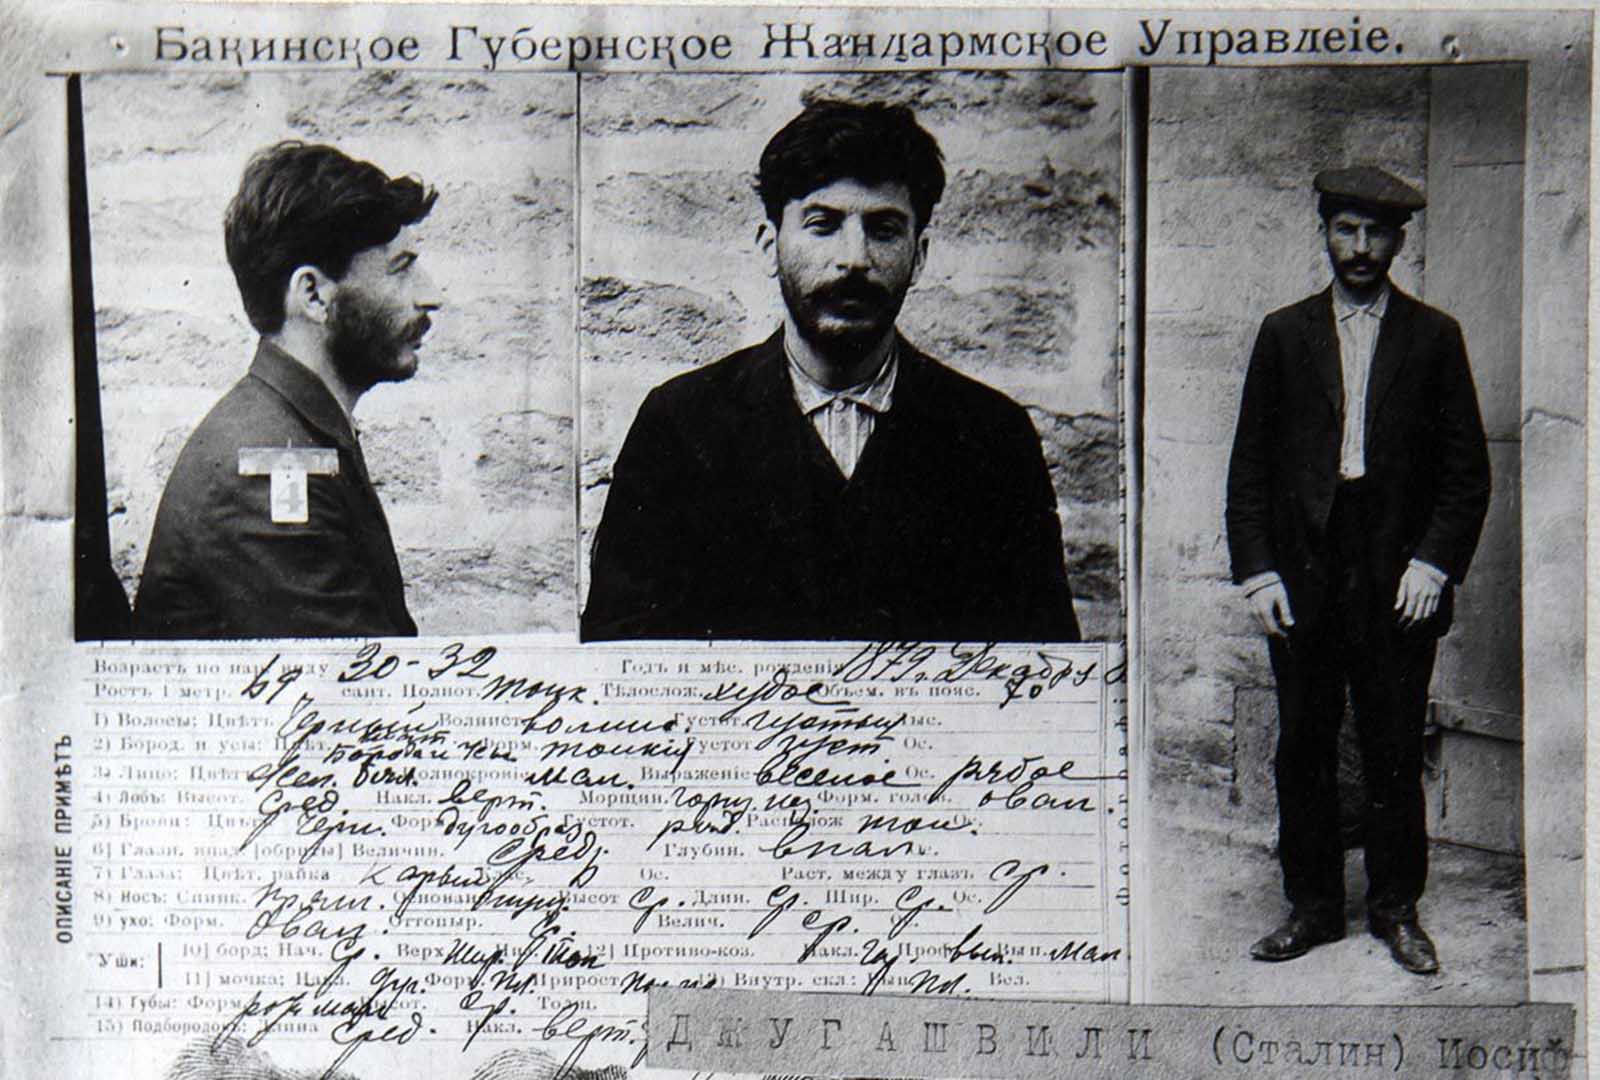 A criminal file on Stalin following his arrest in Baku, Azerbaijan. 1910.